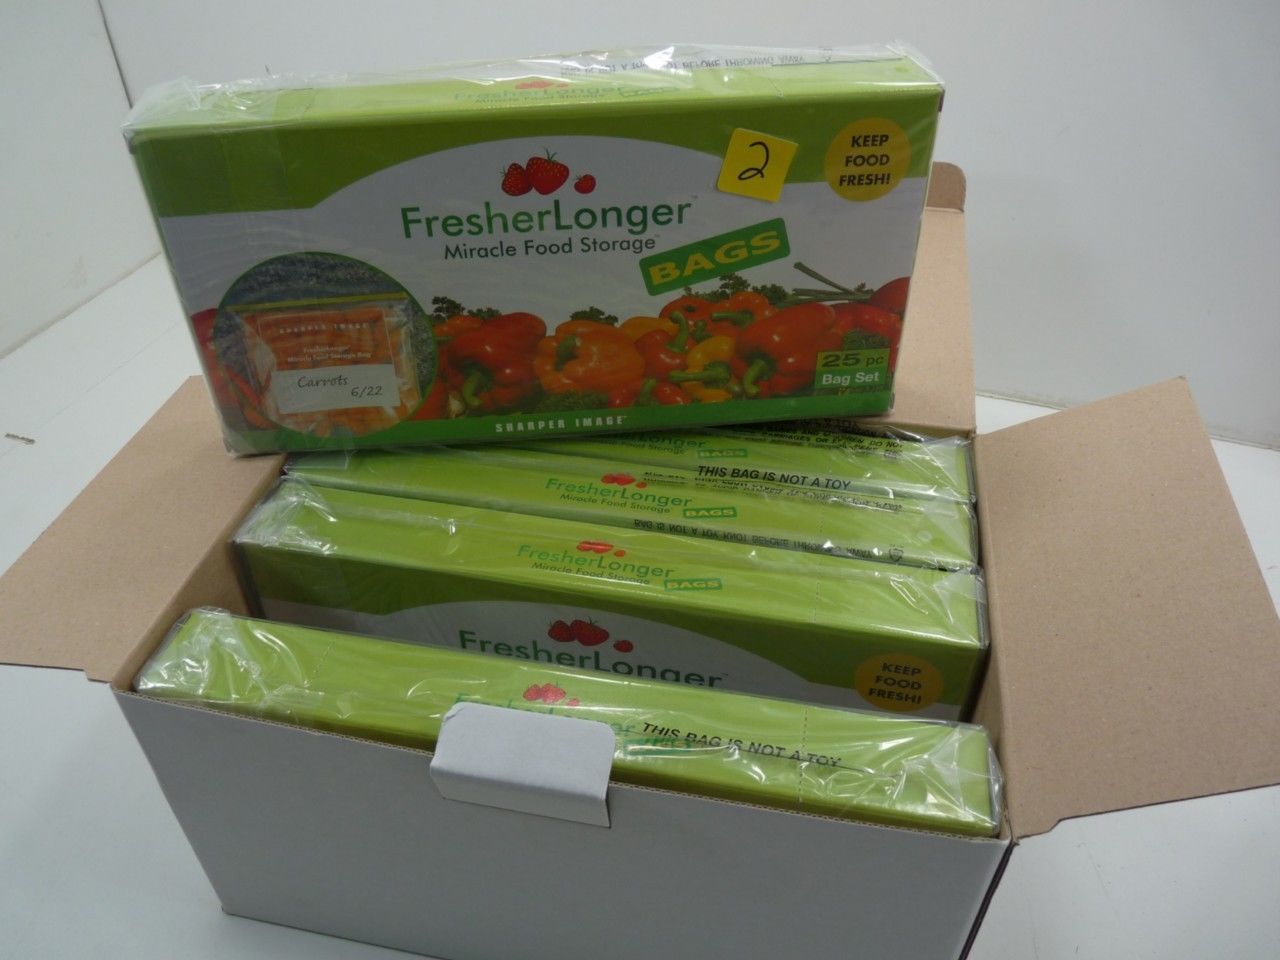 FresherLonger Miracle Food Storage Bags